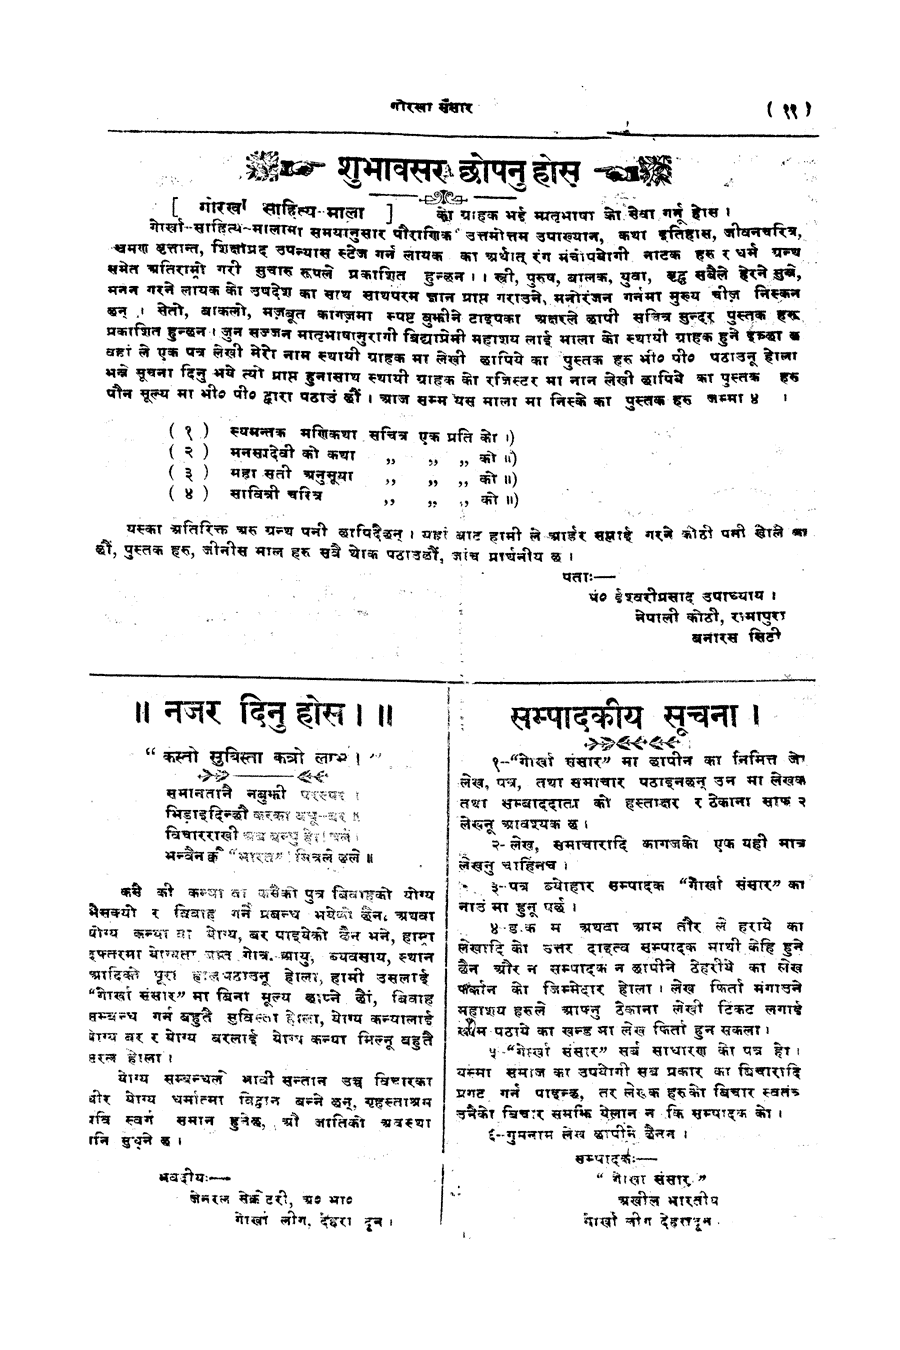 Gorkha Sansar, 29 June 1928, page 11